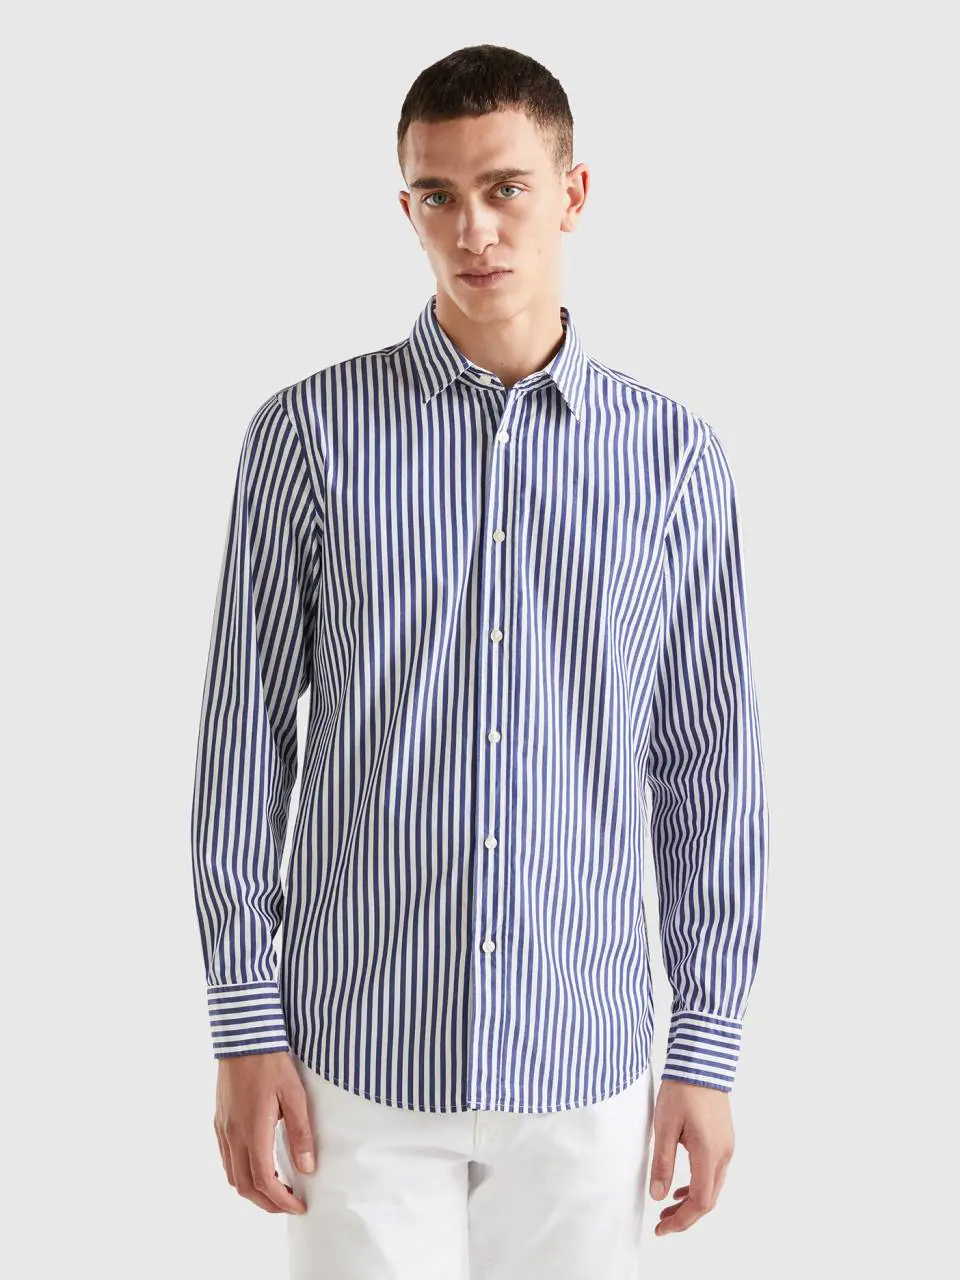 Benetton 100% organic cotton patterned shirt. 1